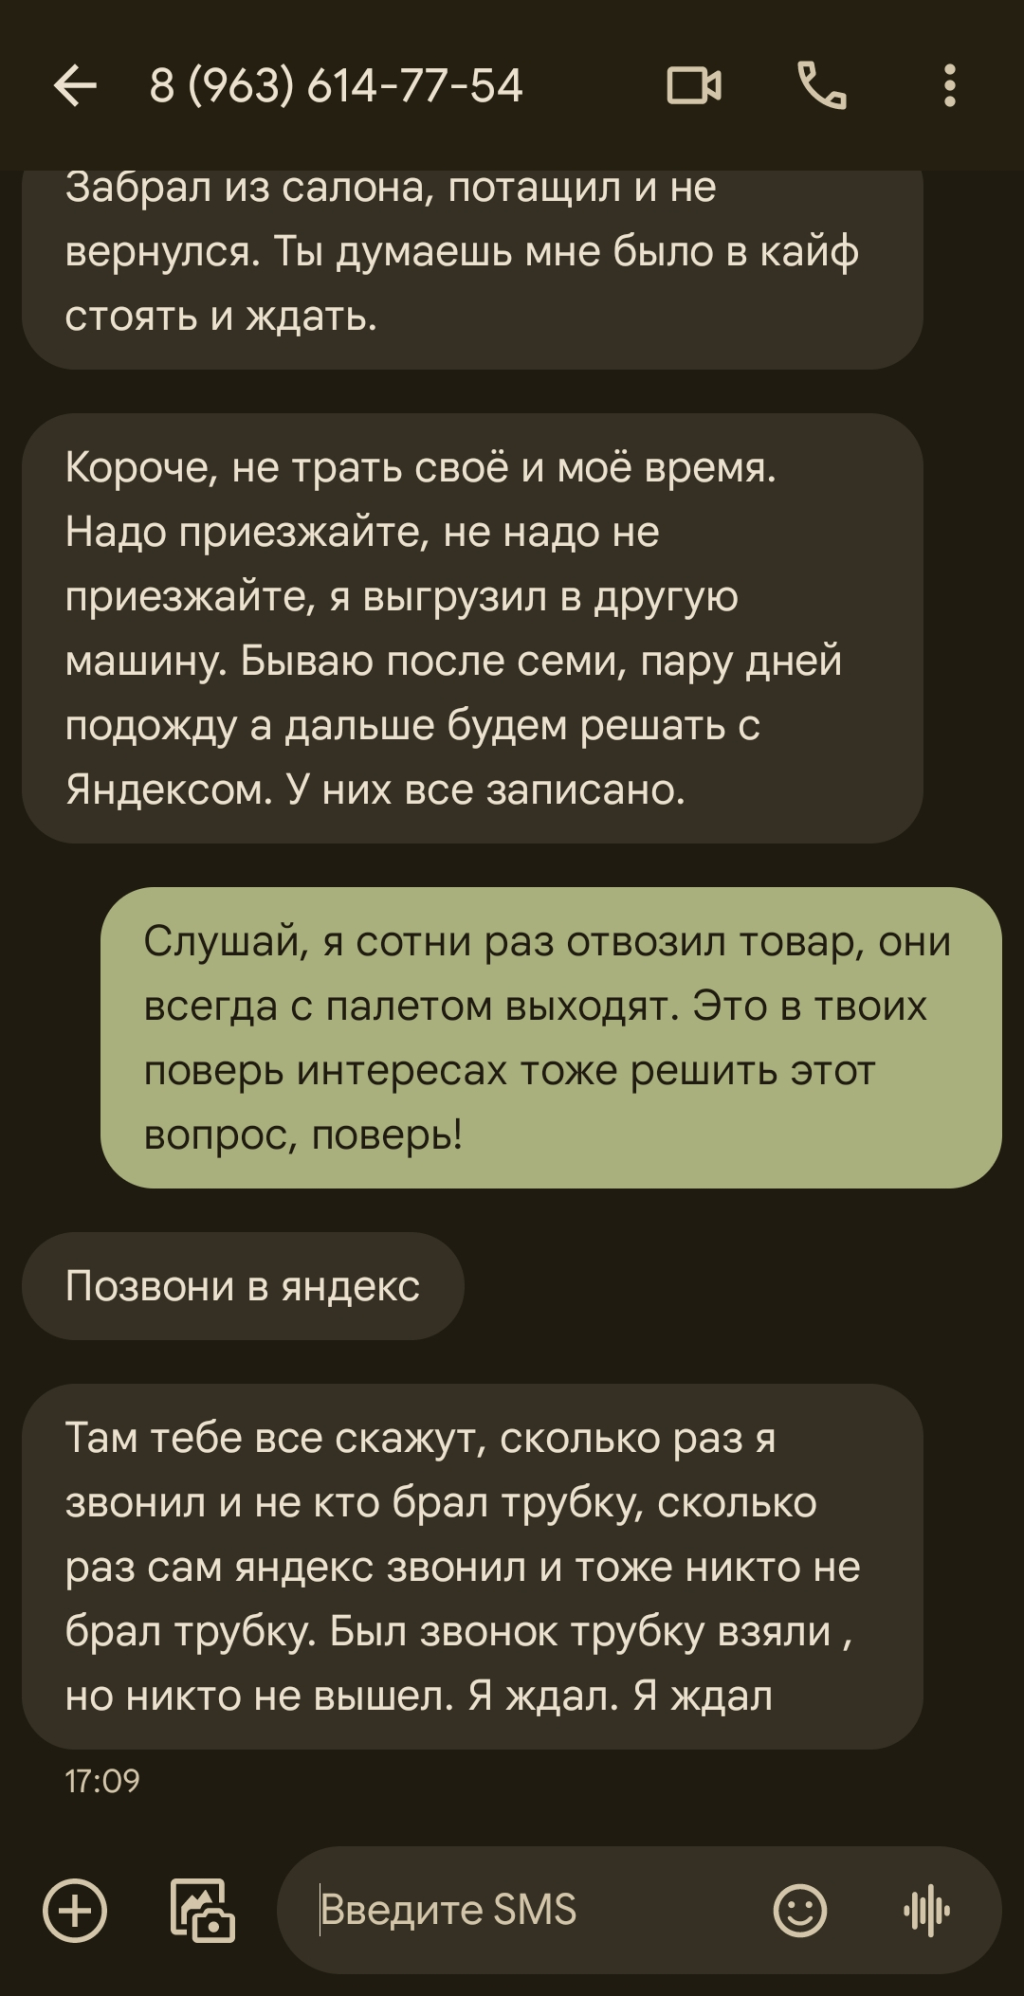 Яндекс Go - Водитель украл товар, занимался шантажом, яндекс не помог!